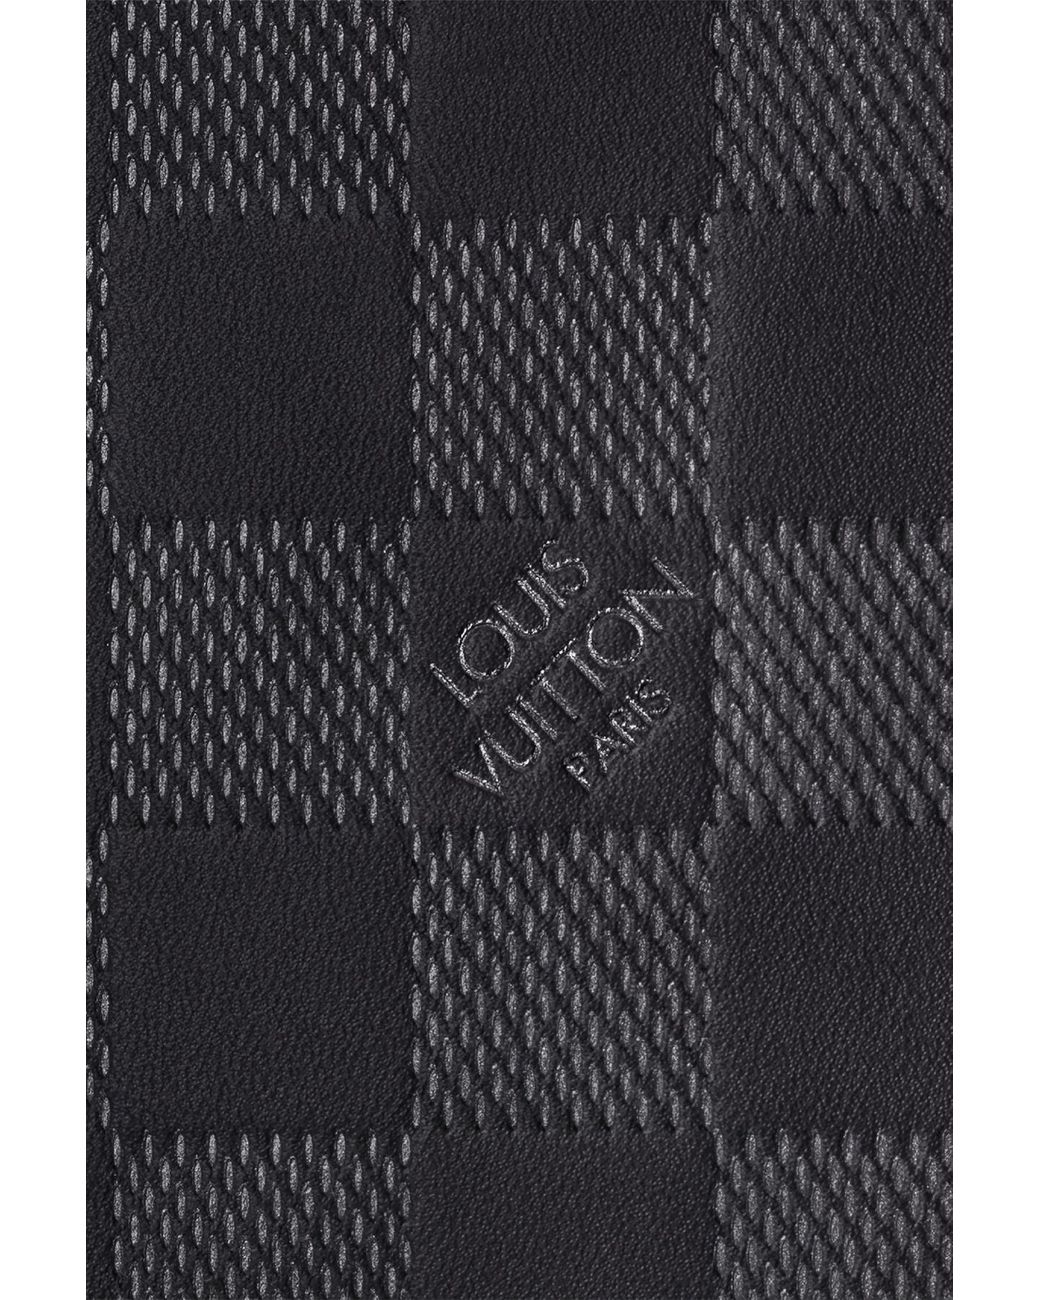 Louis Vuitton District Pm in Black